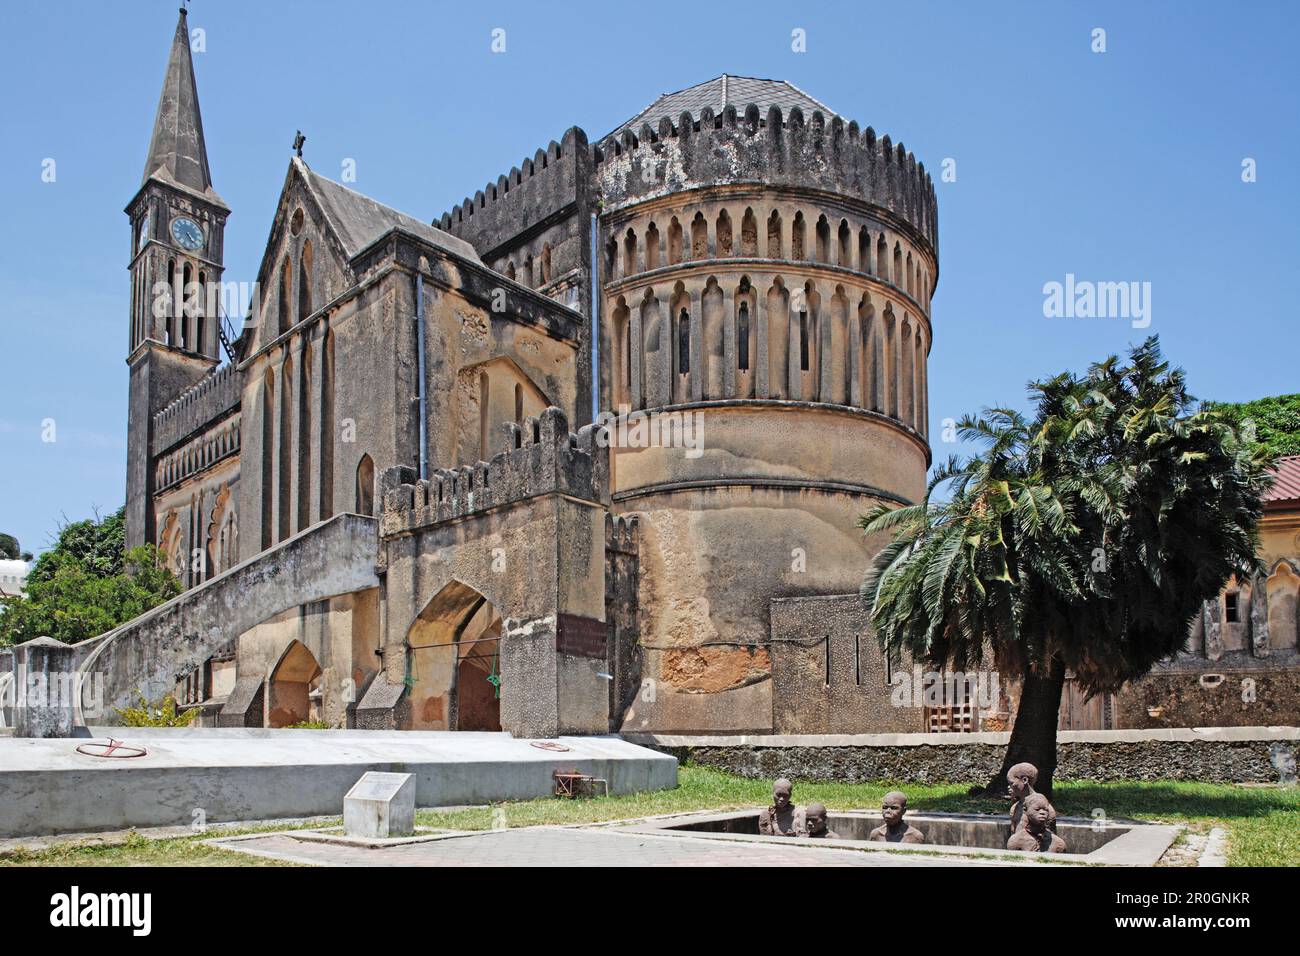 Angelican cathedral, Stonetown, Zanzibar City, Zanzibar, Tanzania, Africa Stock Photo